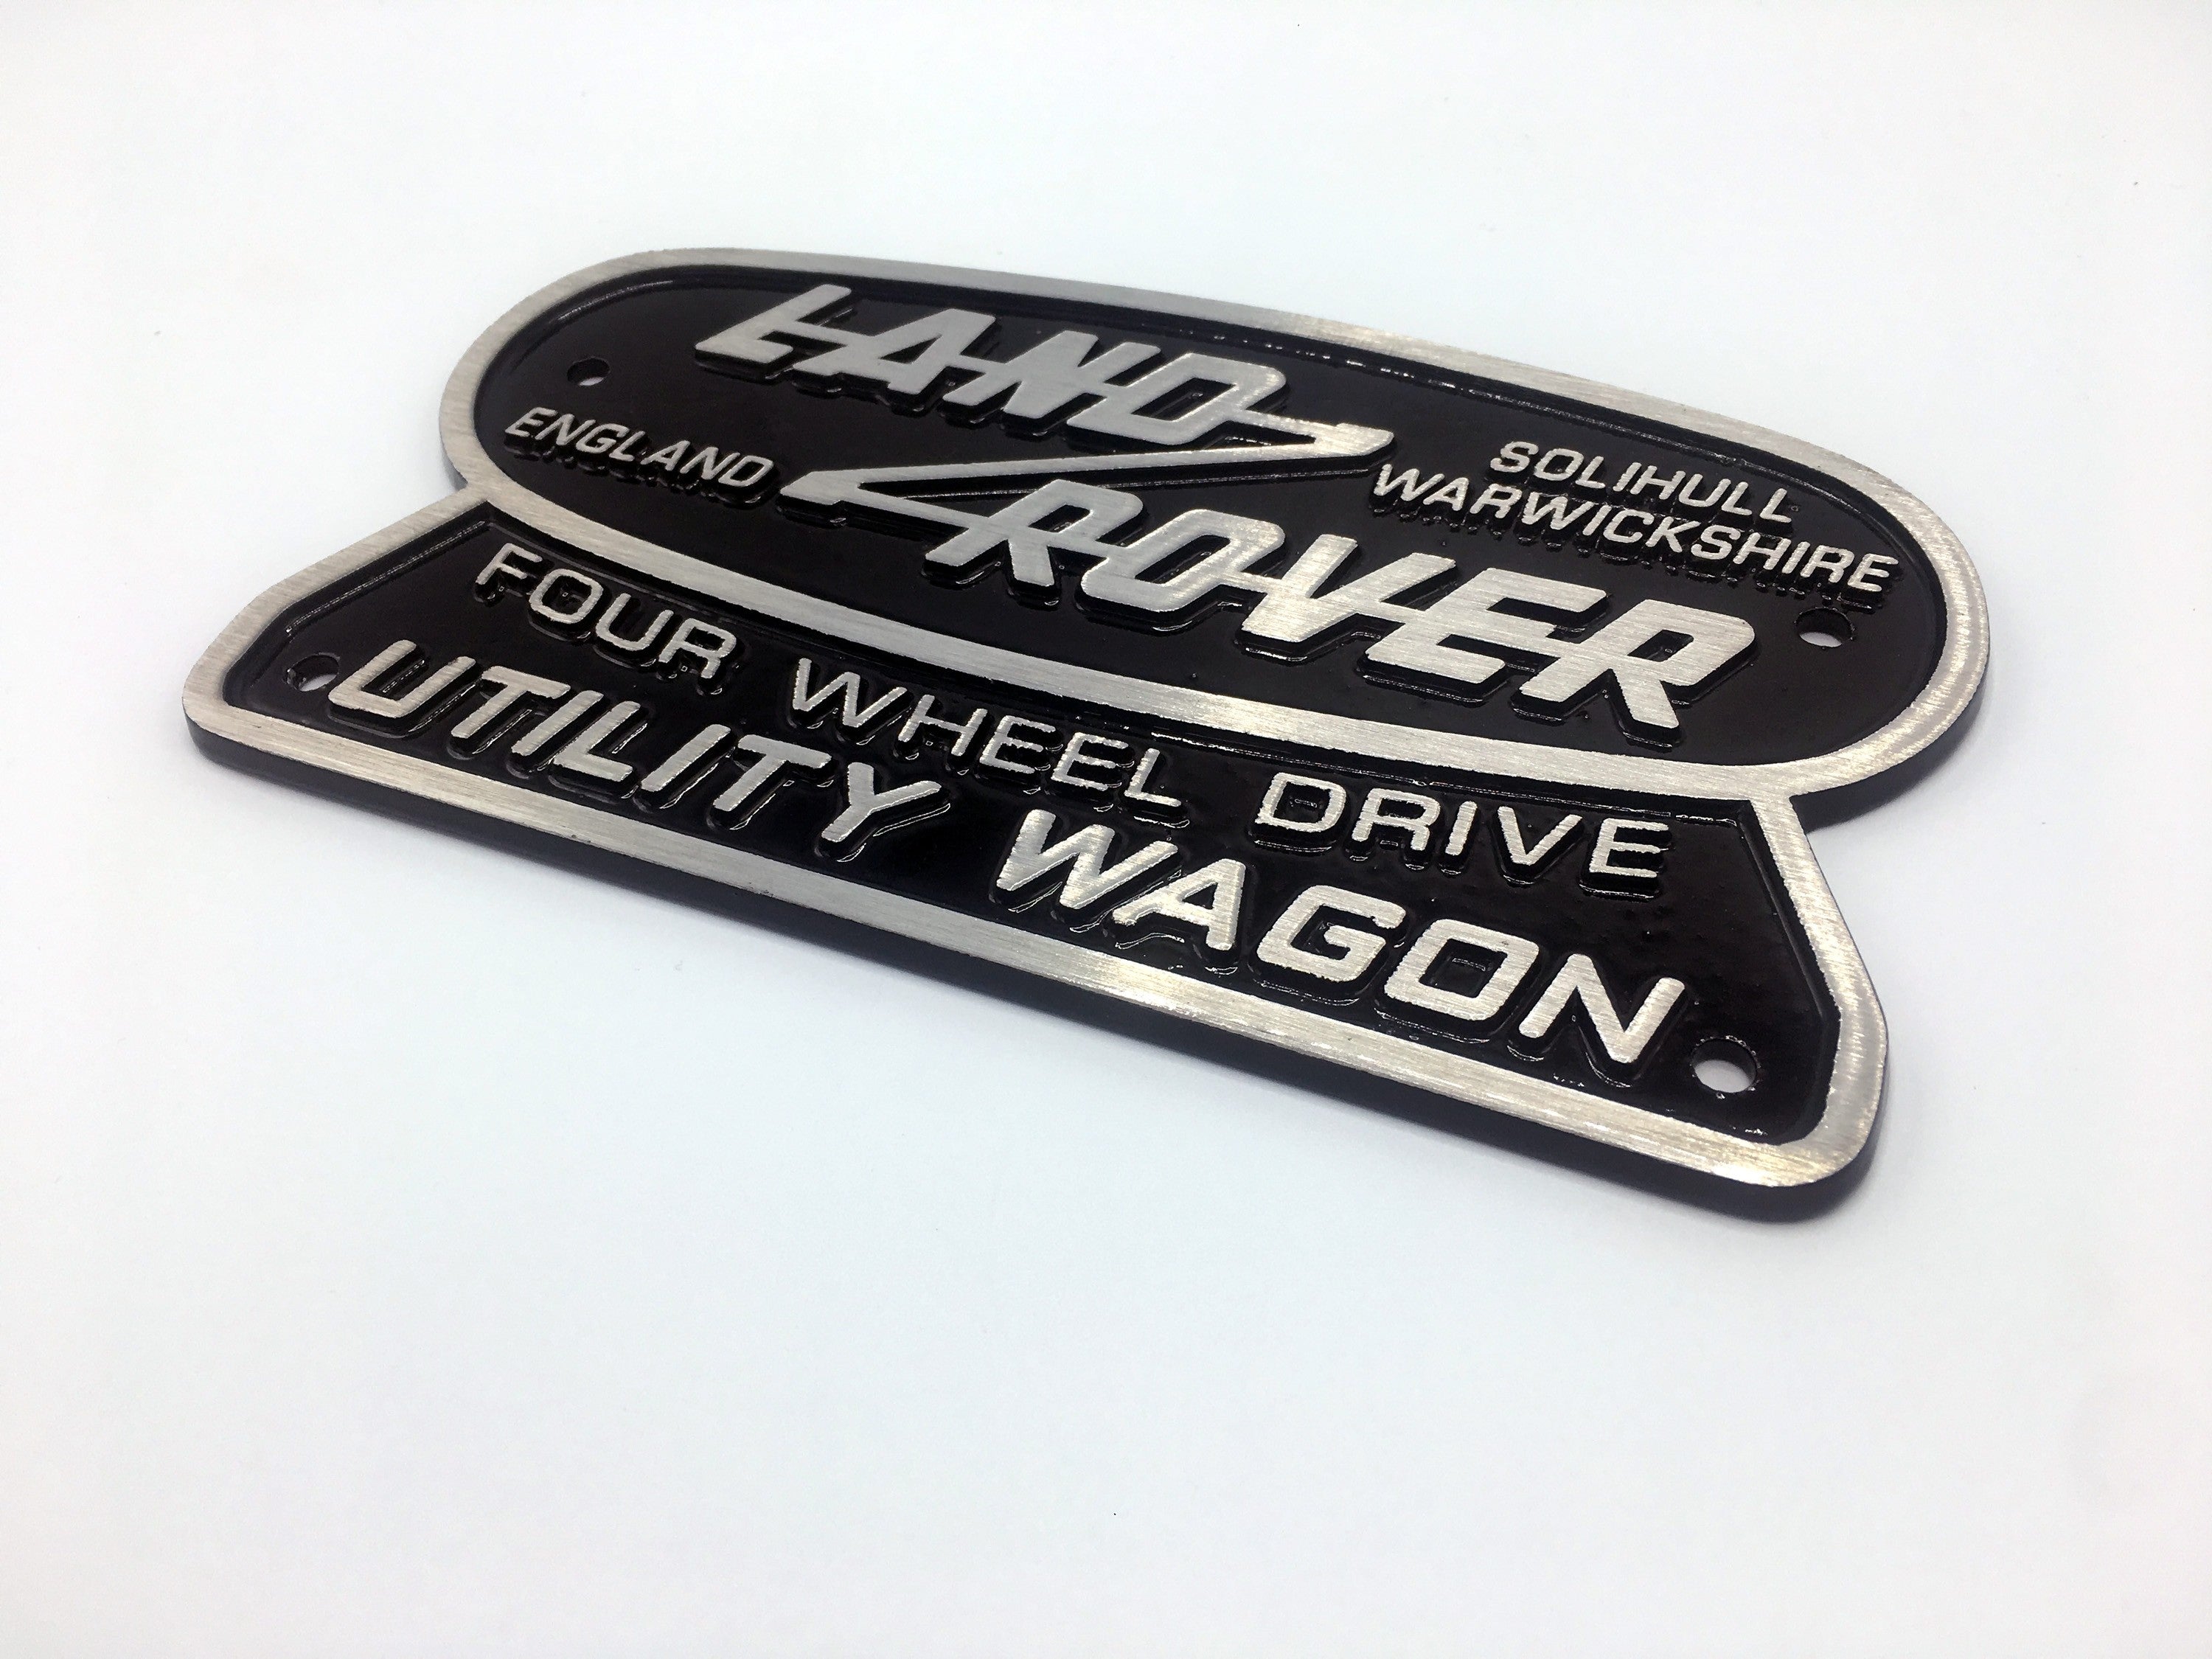 "Land Rover Four Wheel Drive Utility Wagon" Oval Badge (Cast Aluminum)